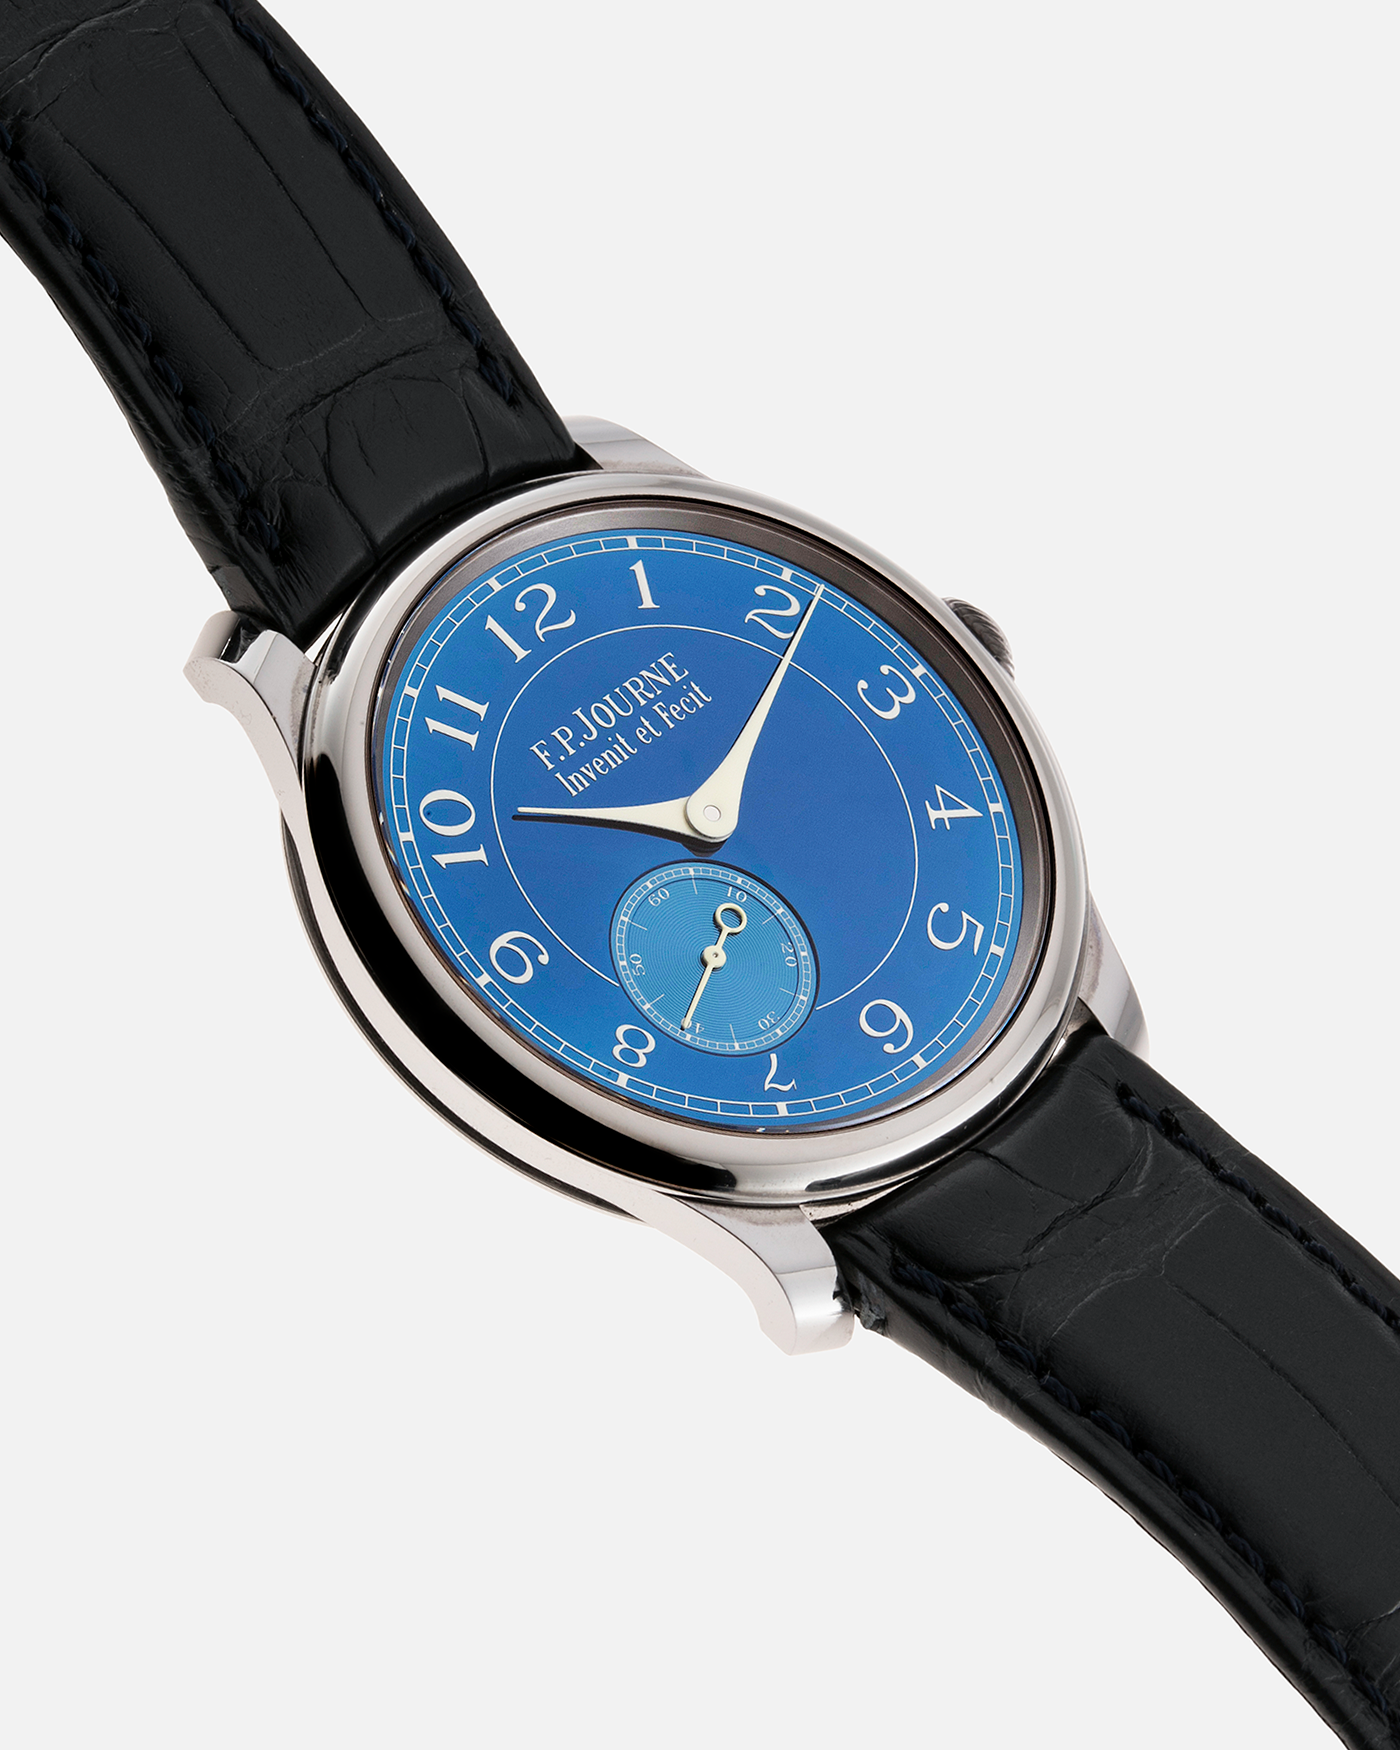 Brand: F.P. Journe Year: 2018 Model: Chronometre Bleu Material: Tantalum Movement: in-house FPJ caliber 1304 Case Diameter: 39mm Bracelet/Strap: F.P. Journe Blue Alligator and Tantalum Tang Buckle